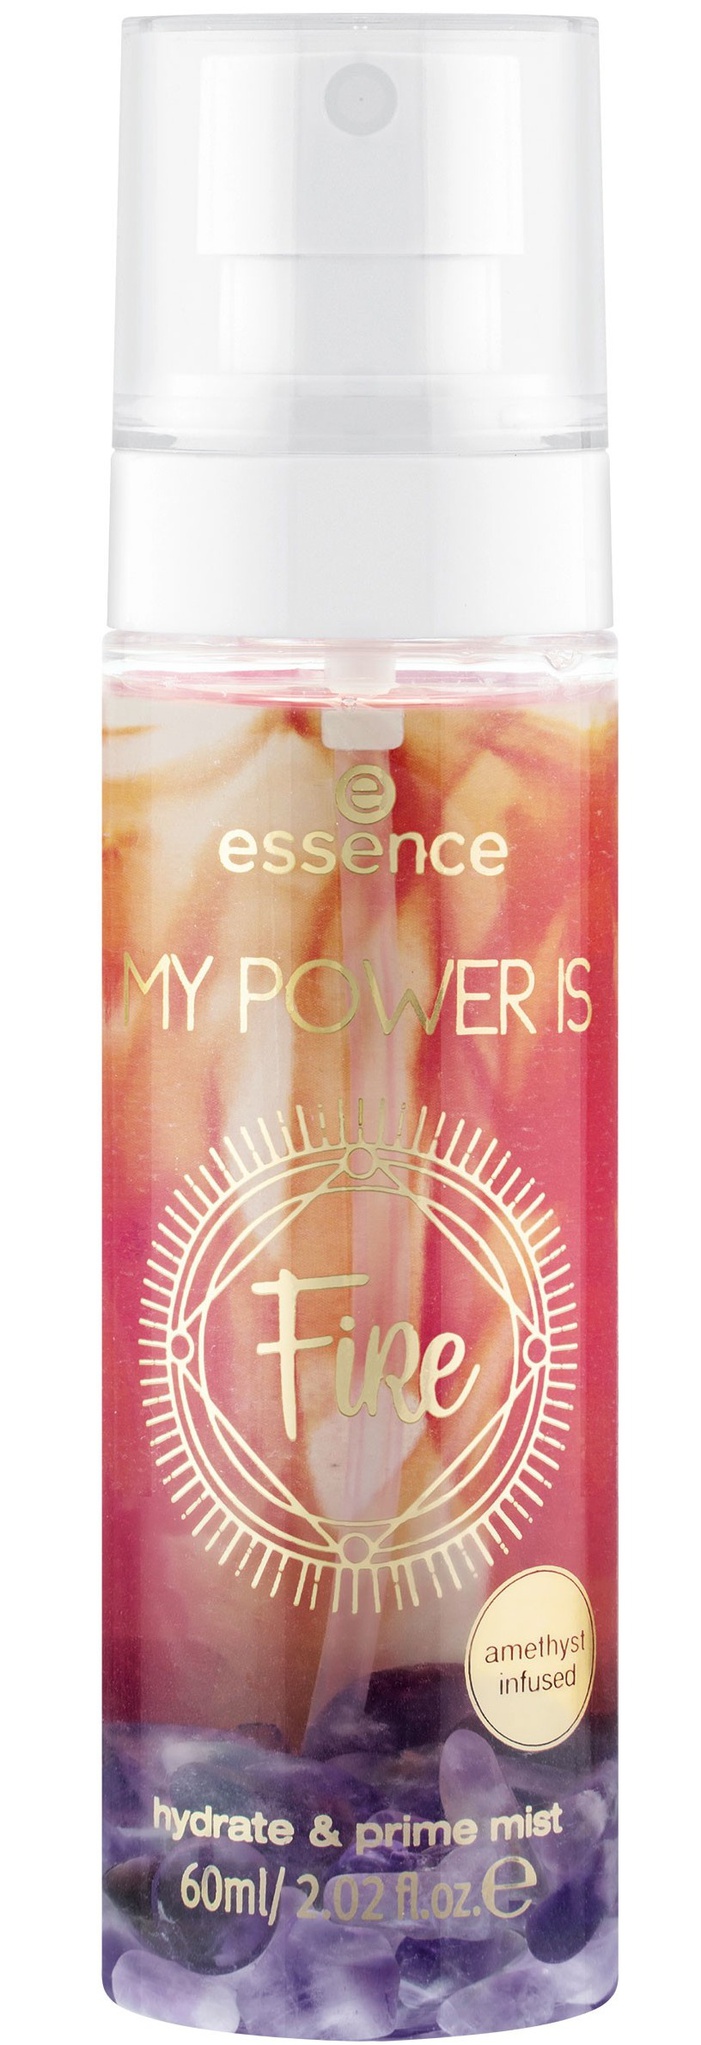 Essence My Power Is Fire Hydrate & Prime Mist